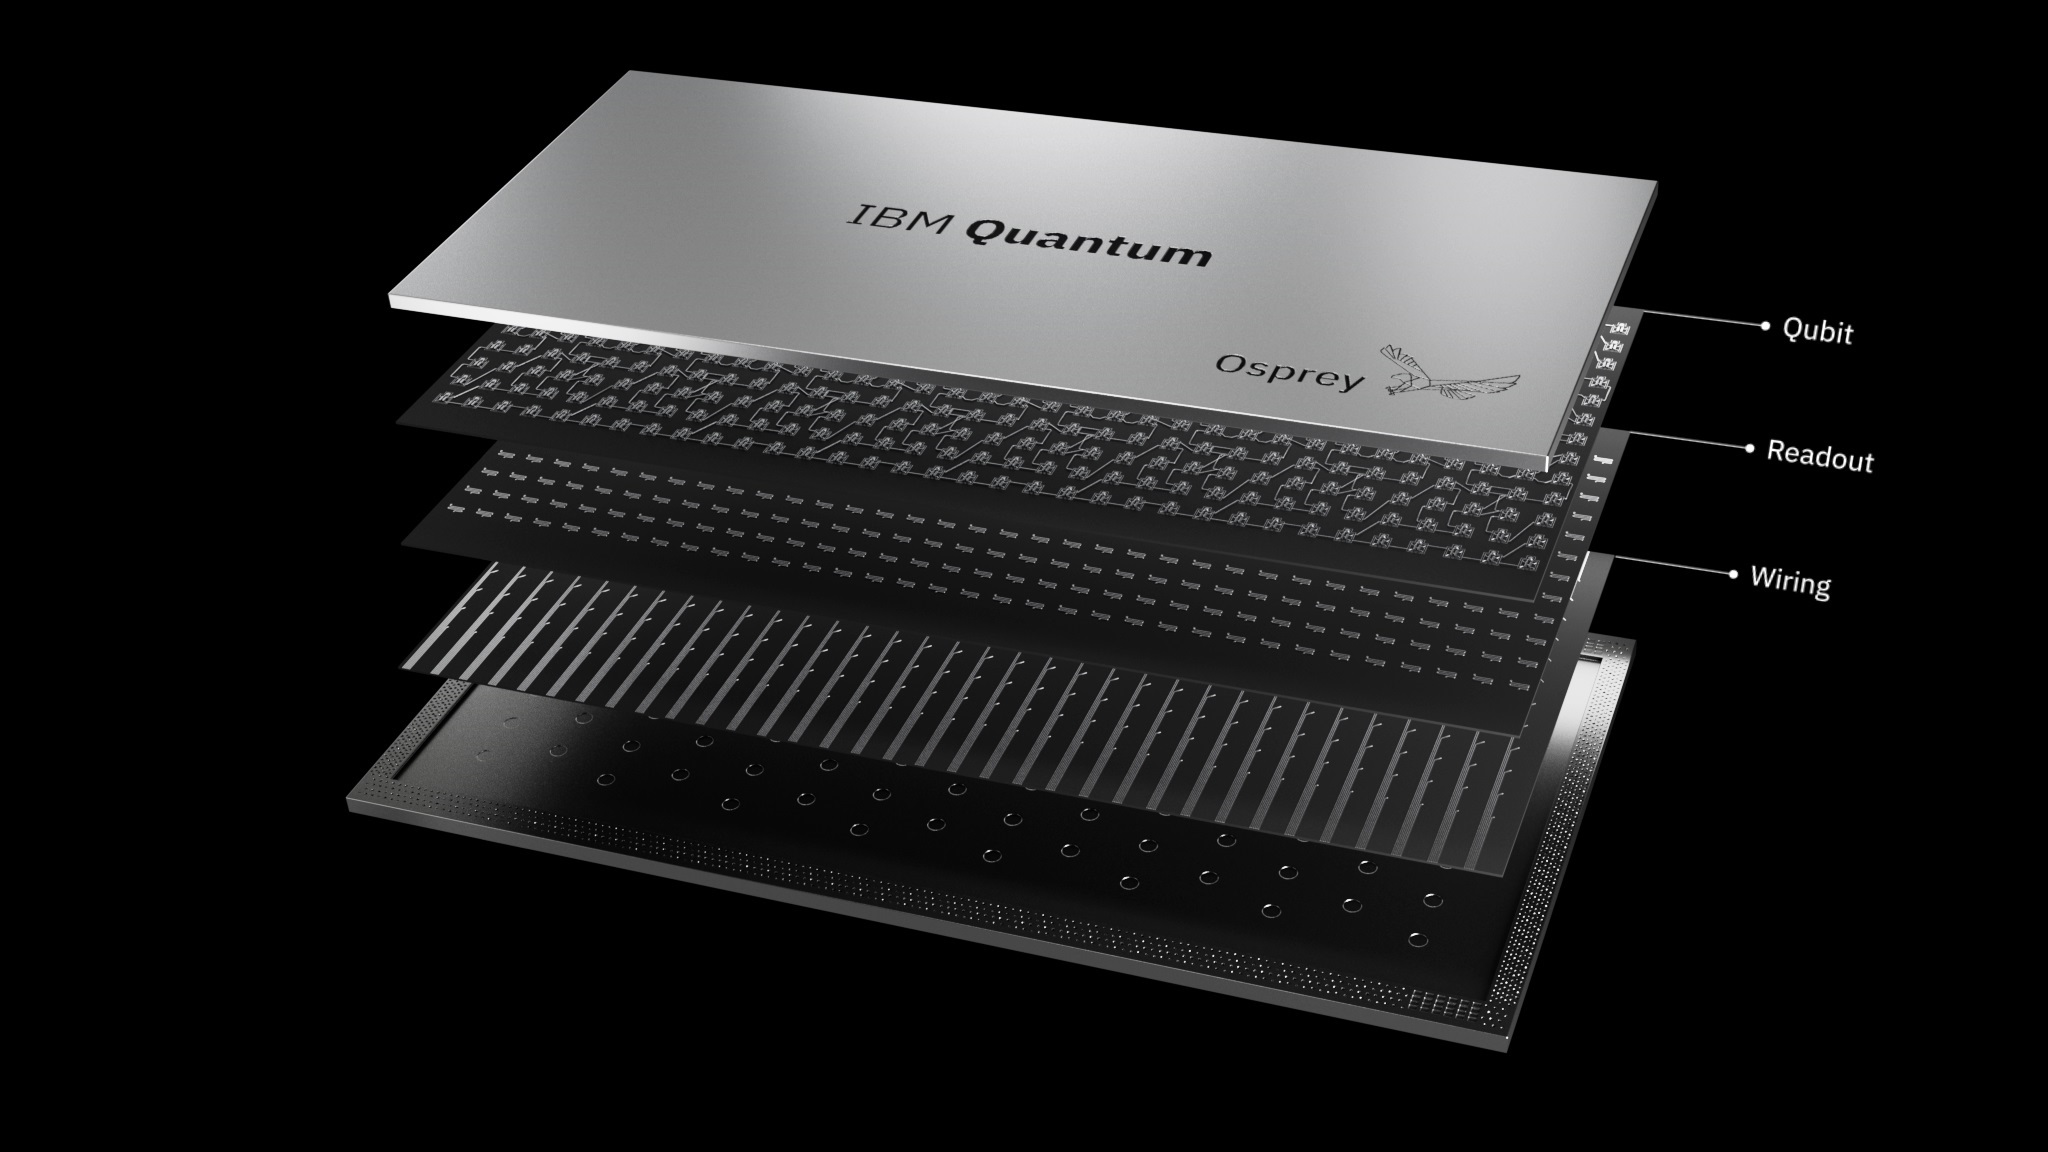 IBM quantum osprey processor